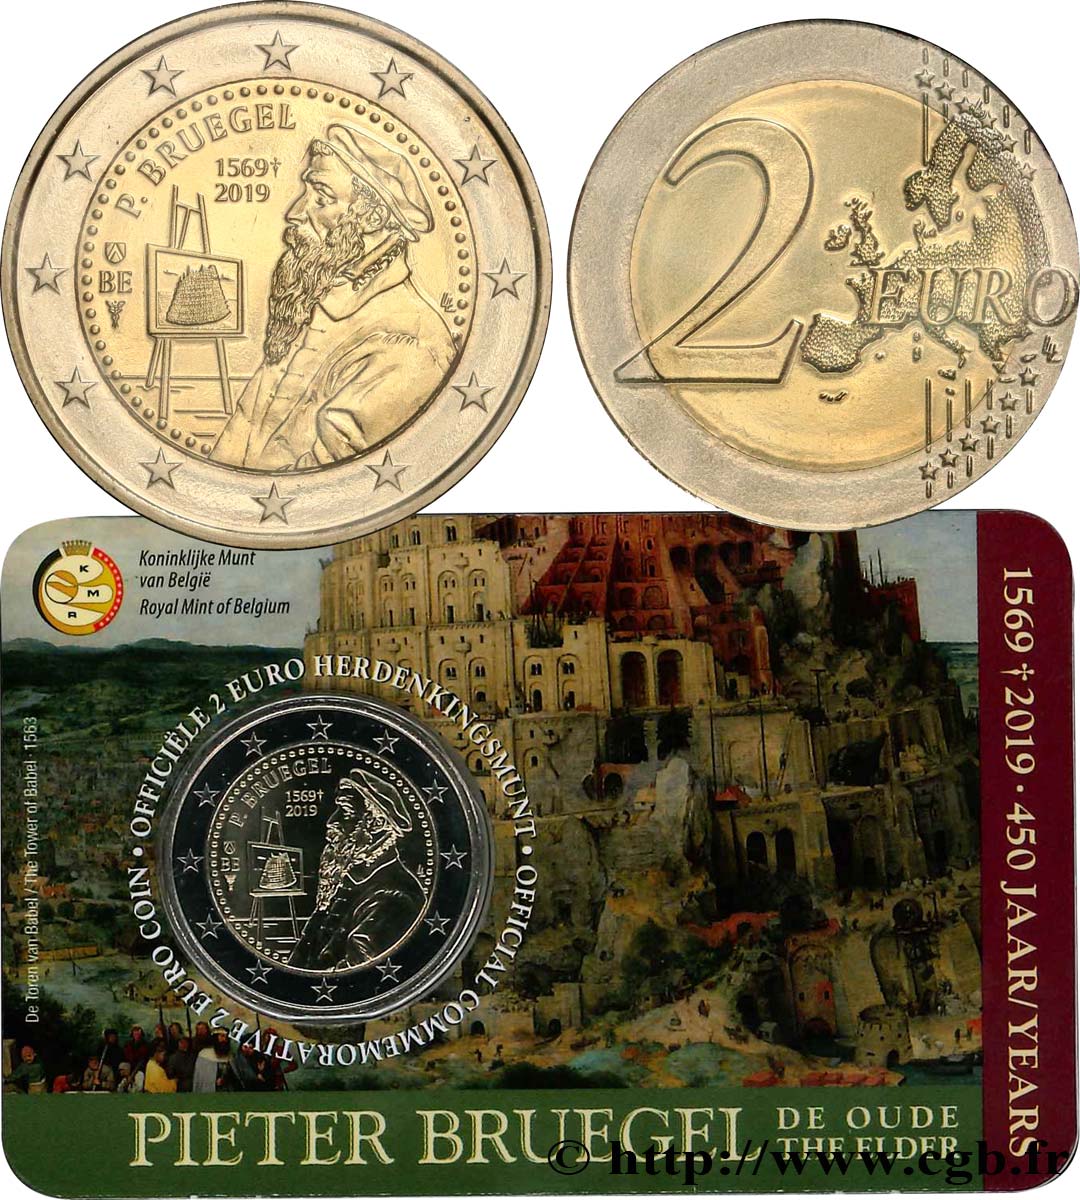 BELGIQUE Coin-card 2 Euro PIETER BRUEGEL - Version flamande 2019 FDC